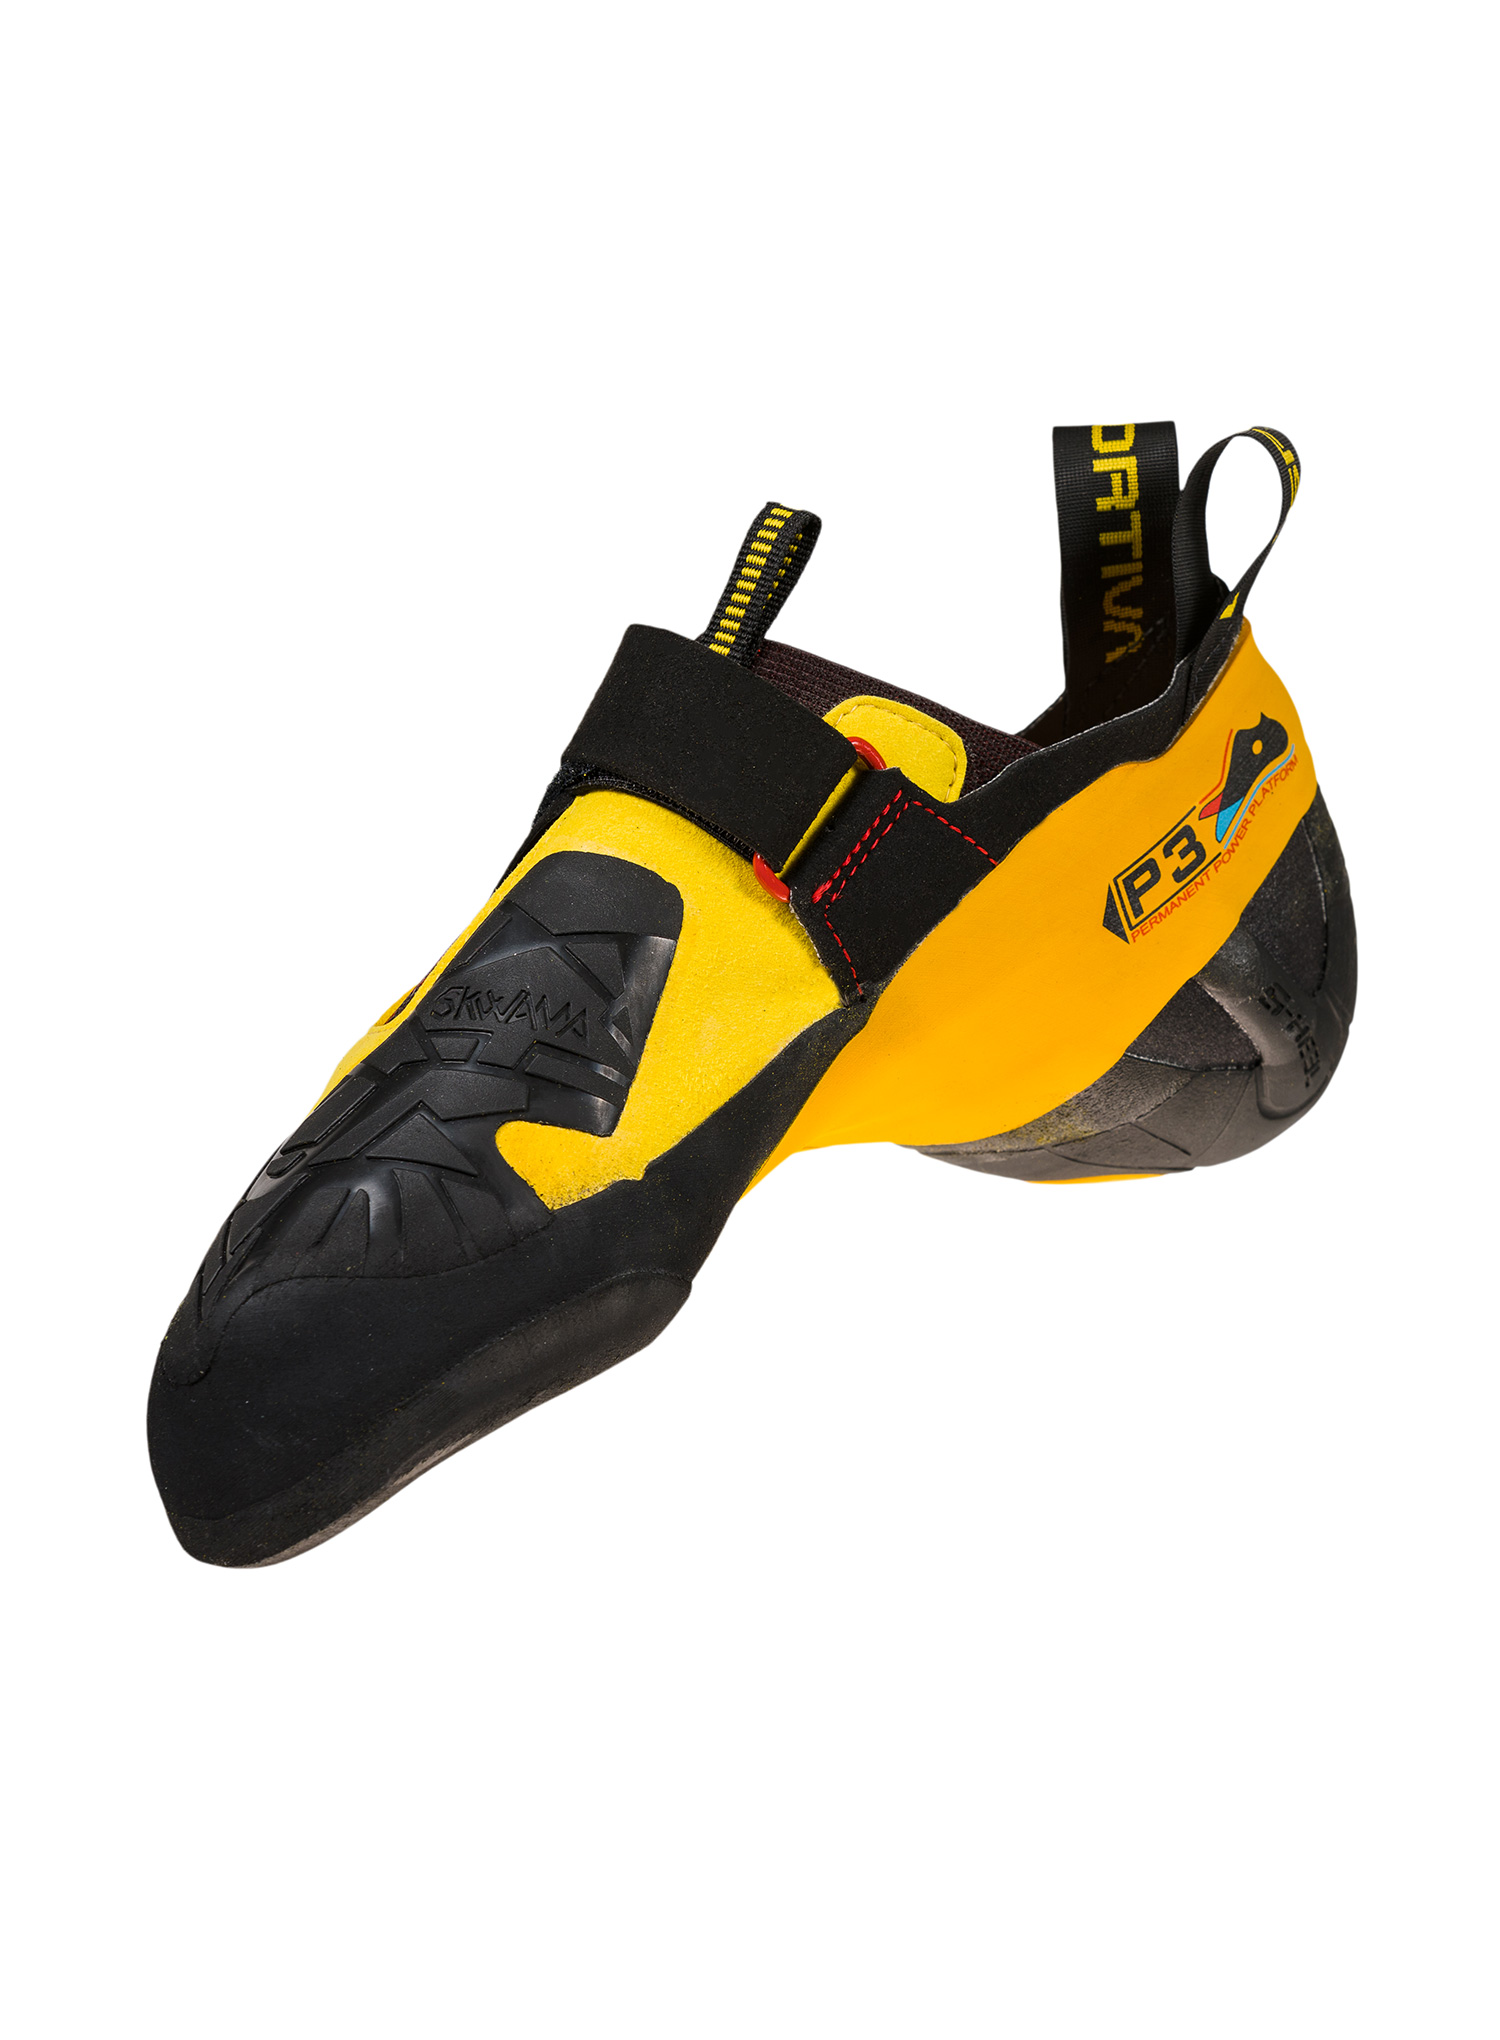 La Sportiva Skwama - black yellow - Shop Outdoor Online